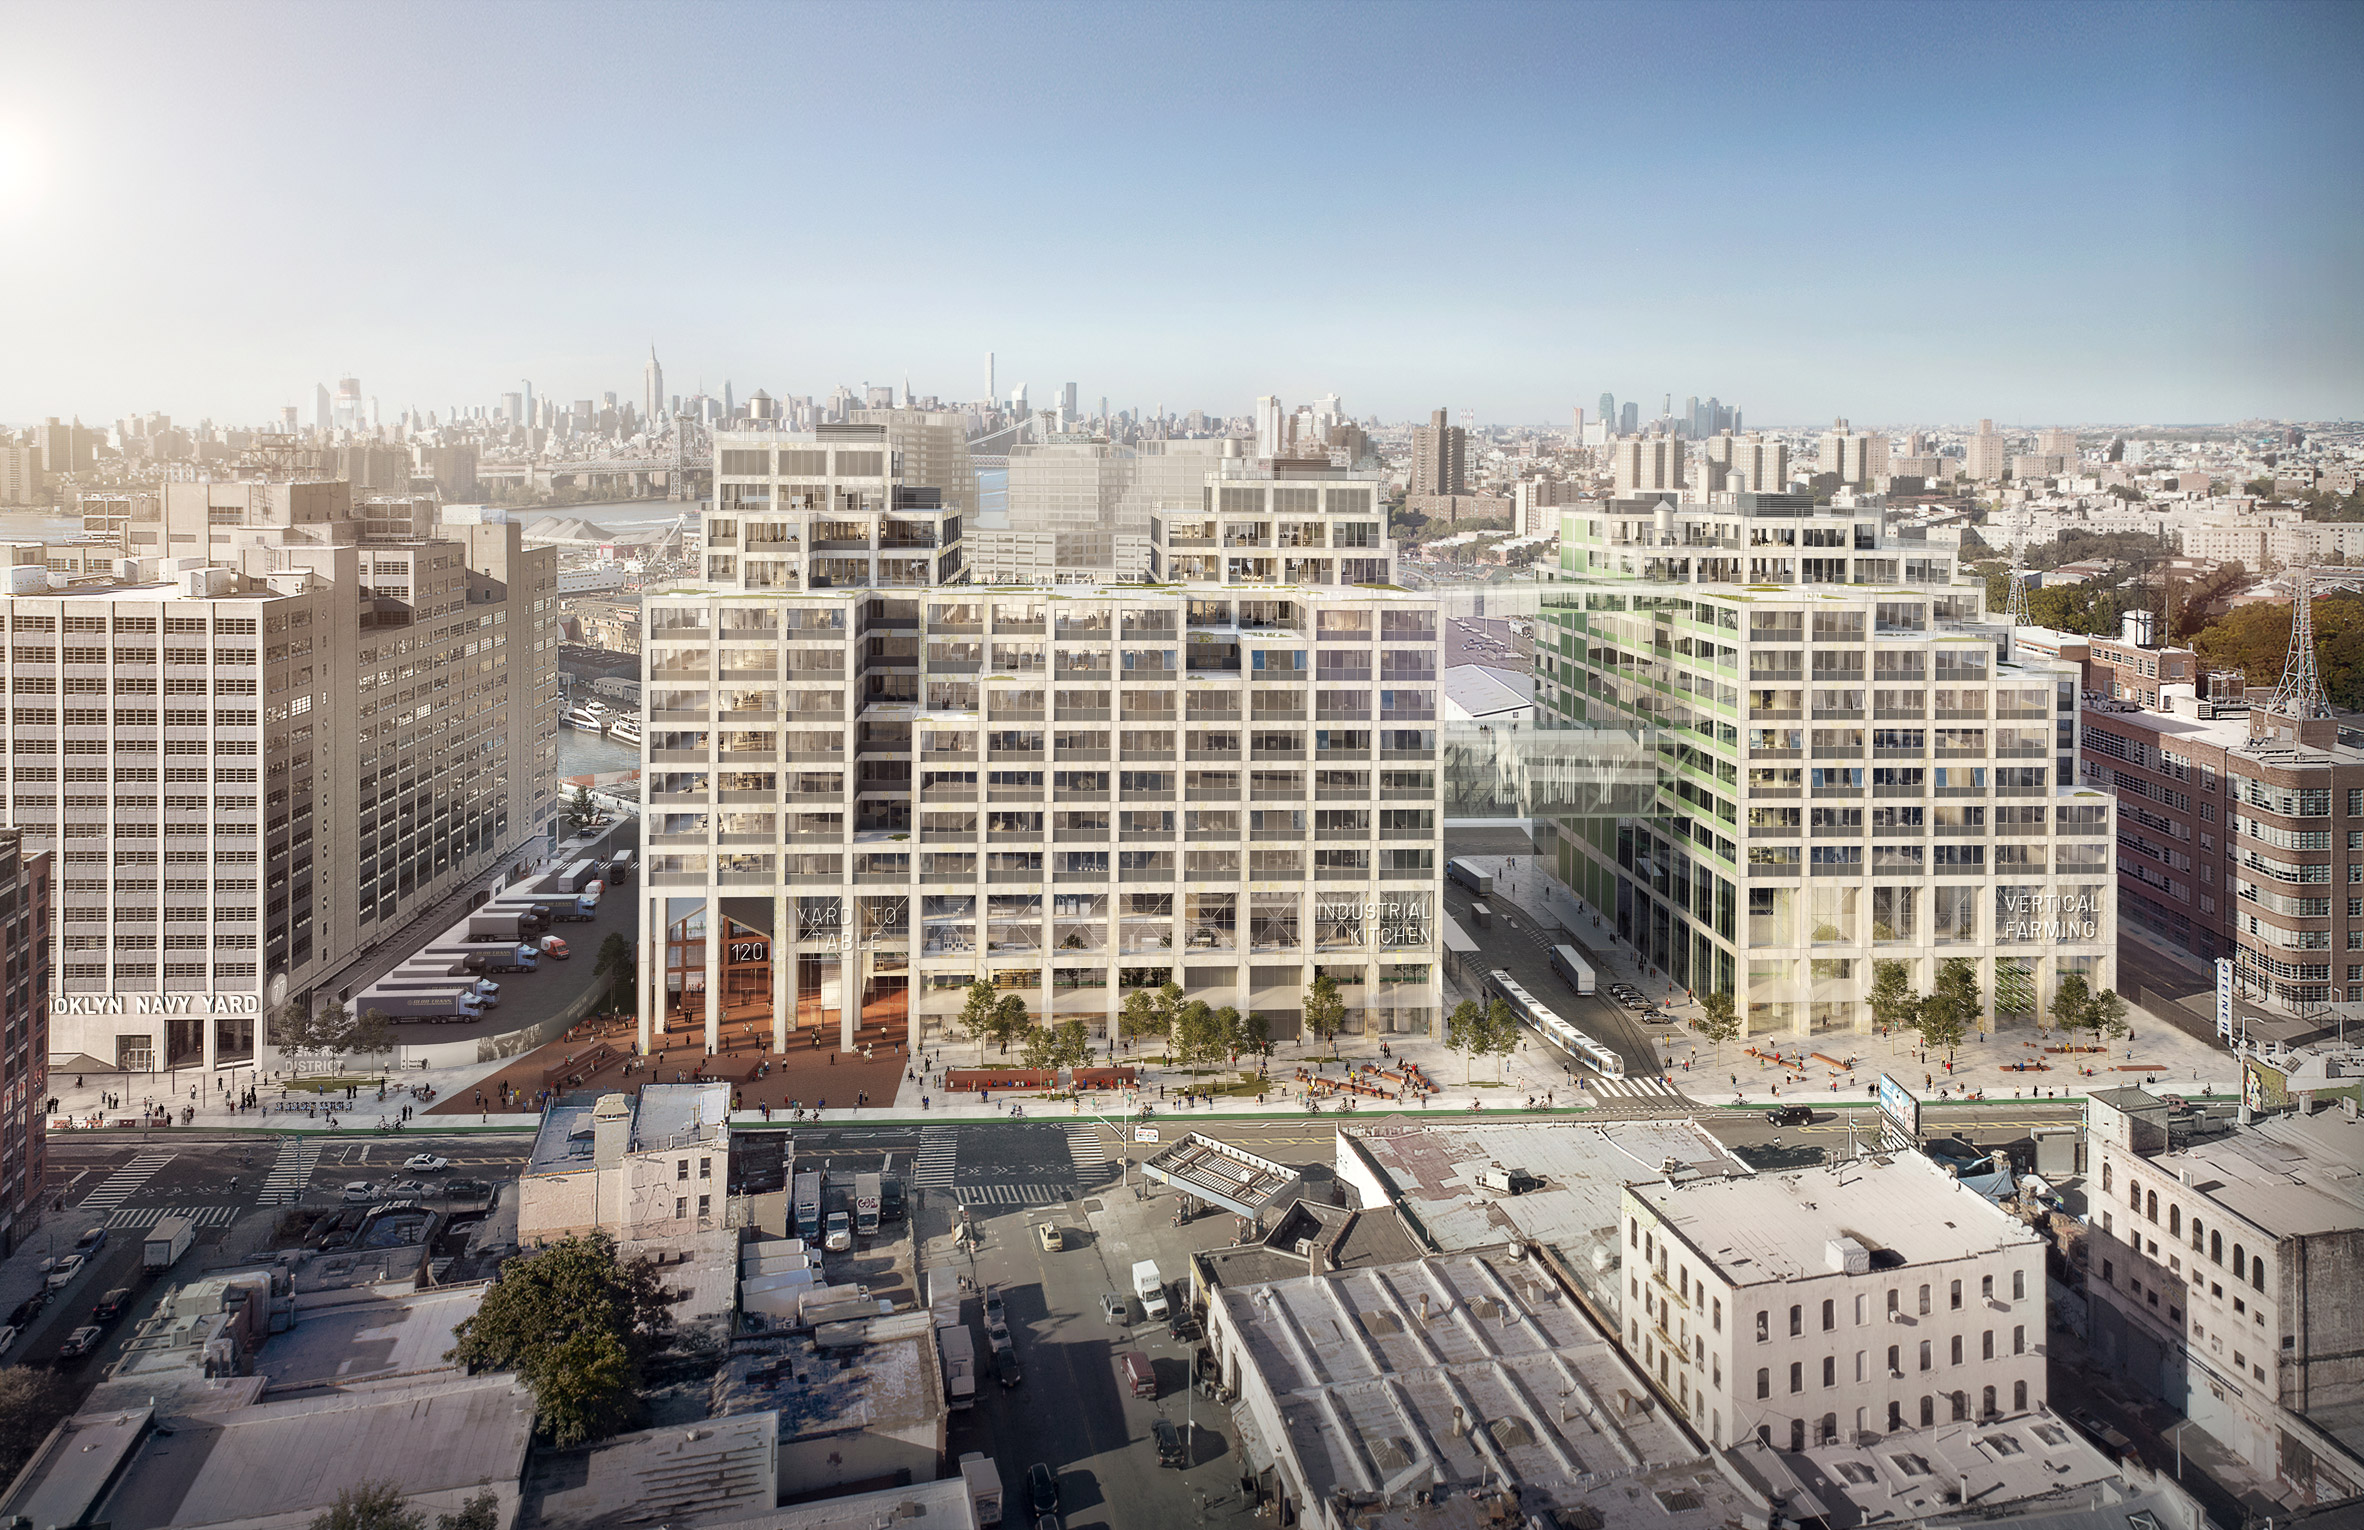 Brooklyn Navy Yard masterplan by WXY Architecture and Urban Design